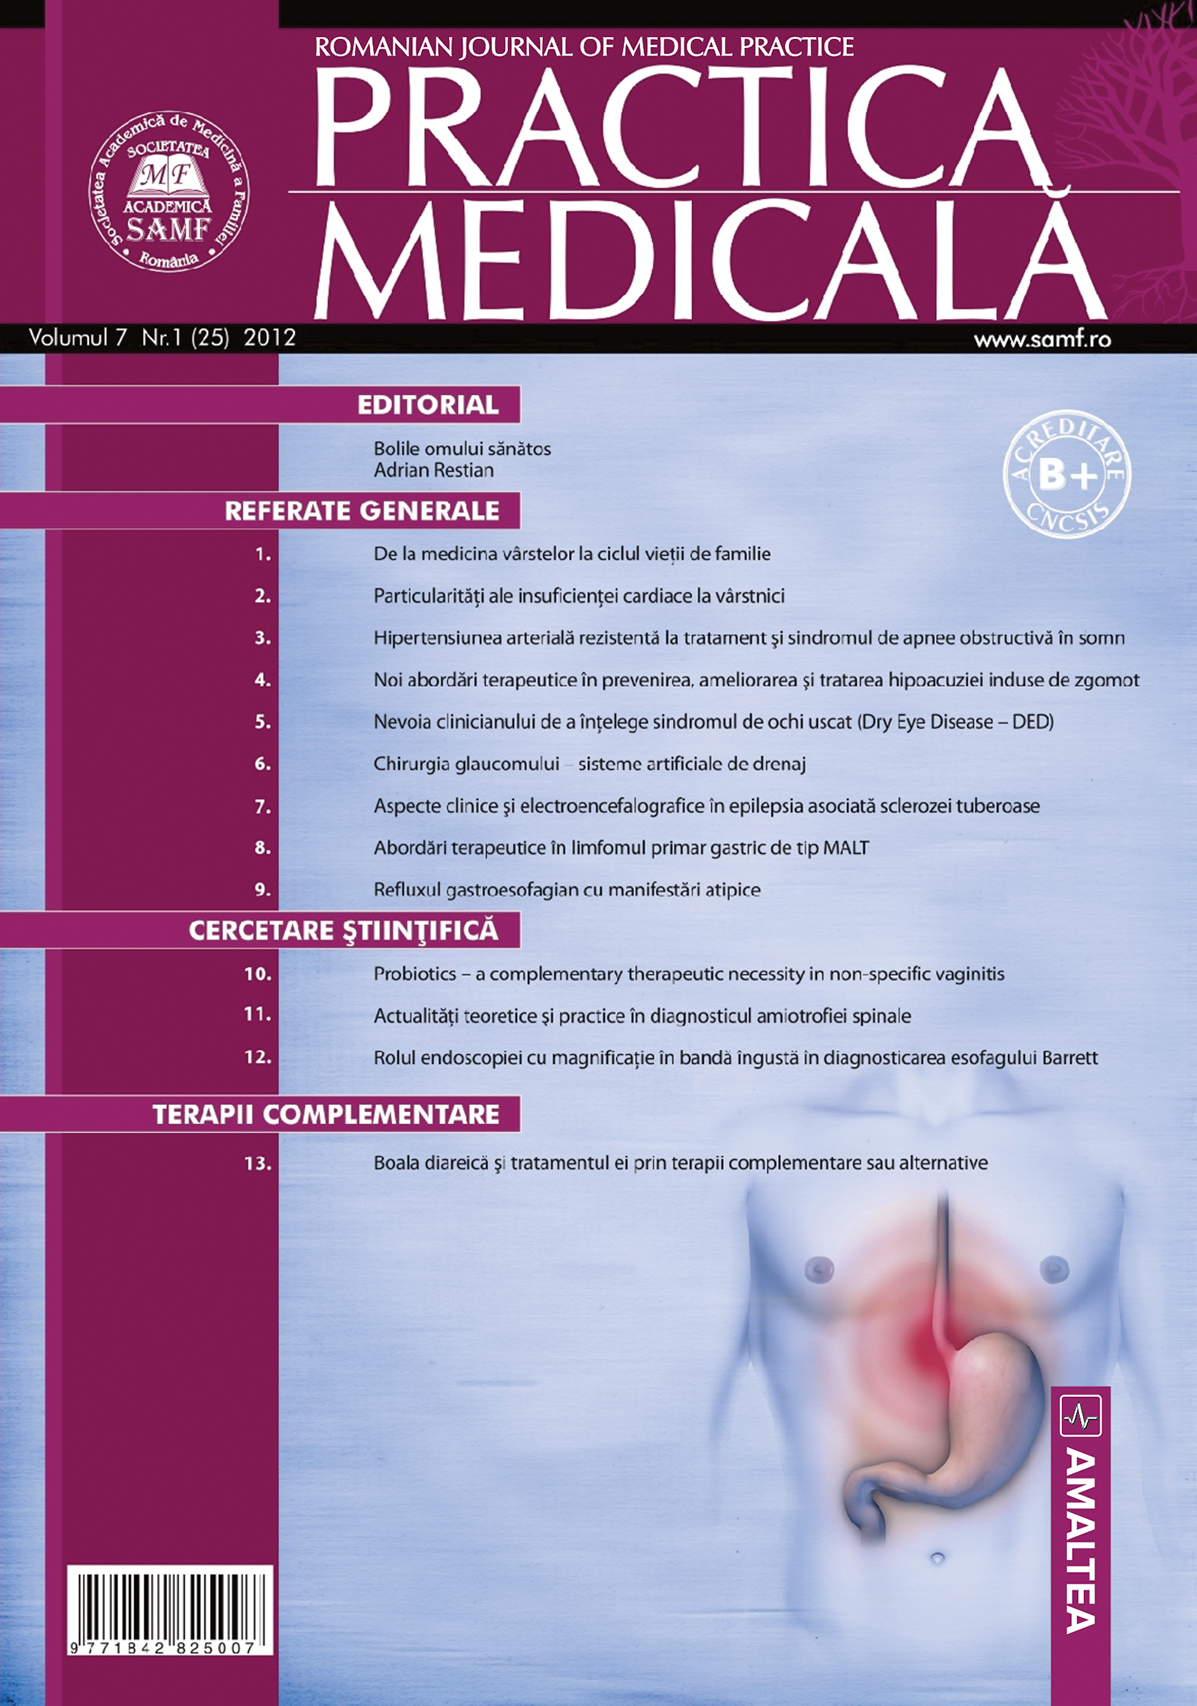 Romanian Journal of Medical Practice | Practica Medicala, Vol. VII, No. 1 (25), 2012